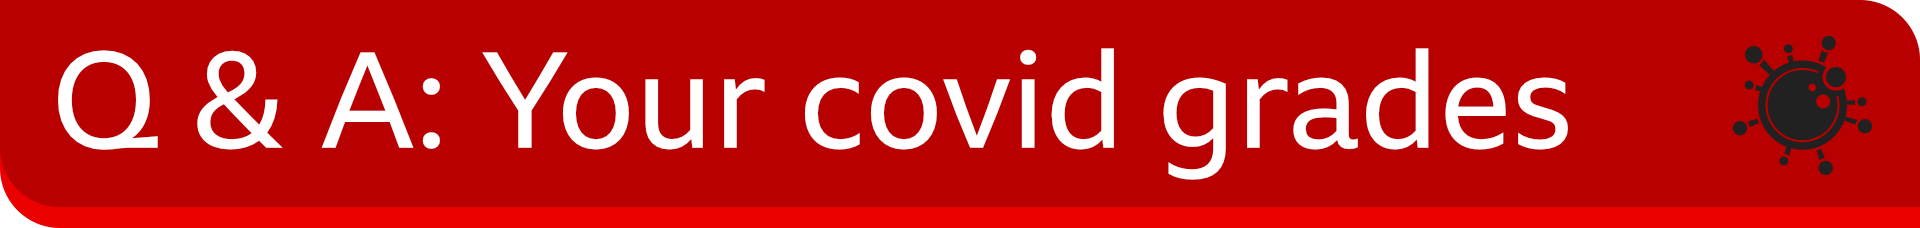 Covid grades Q&A banner